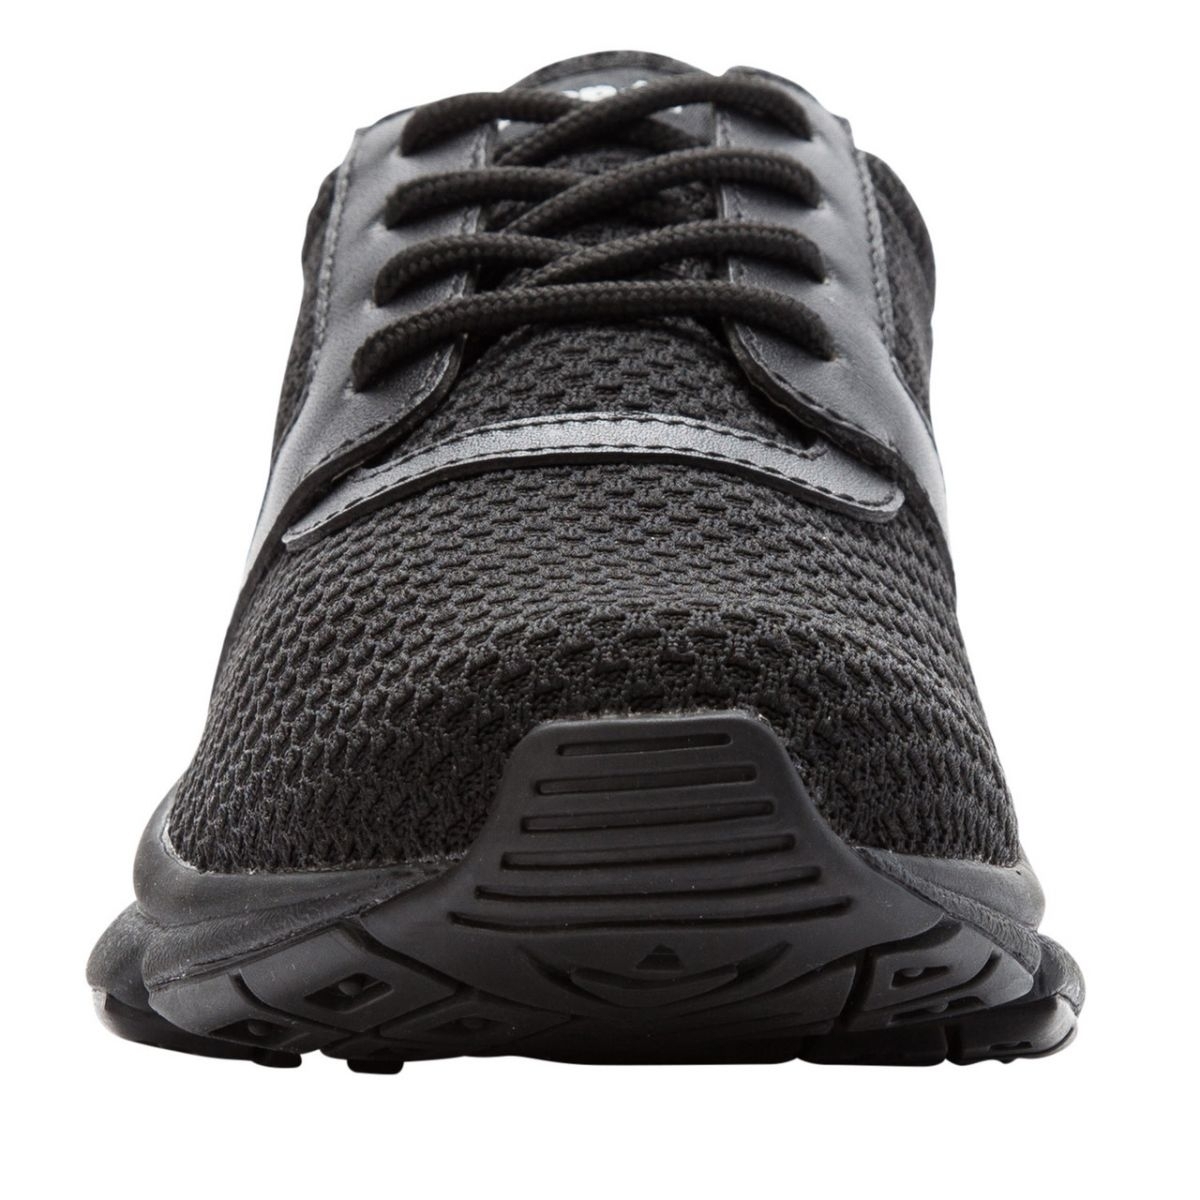 Propet Women's Stability X Walking Shoe Black - WAA032MBLK BLACK - BLACK, 11 Narrow